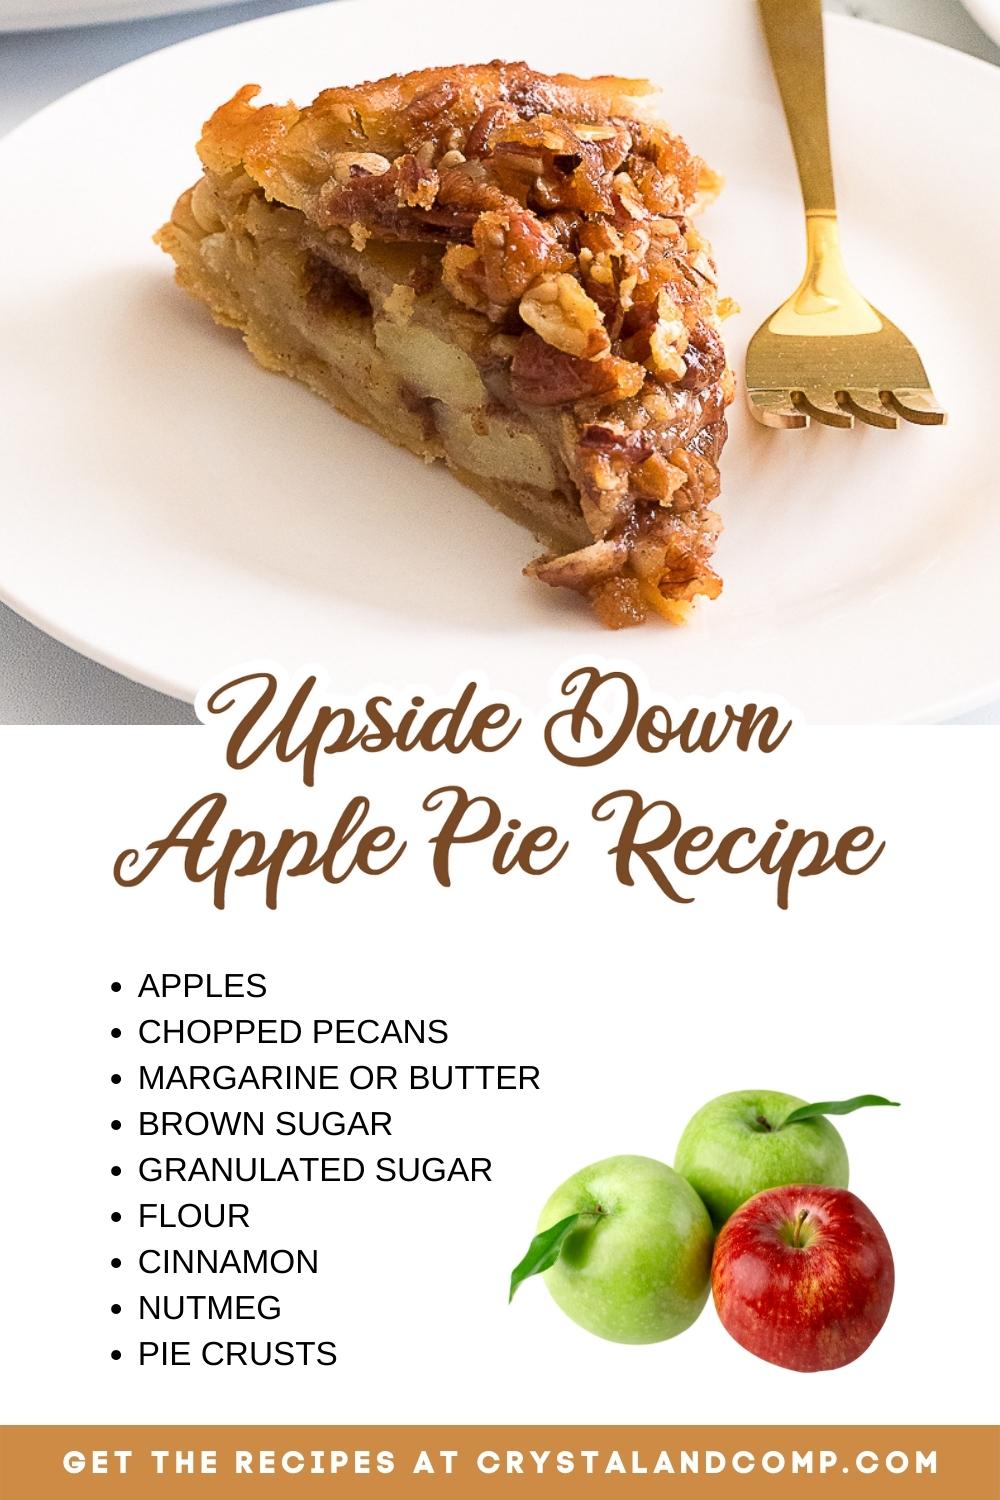 upside down apple pie recipe ingredients list